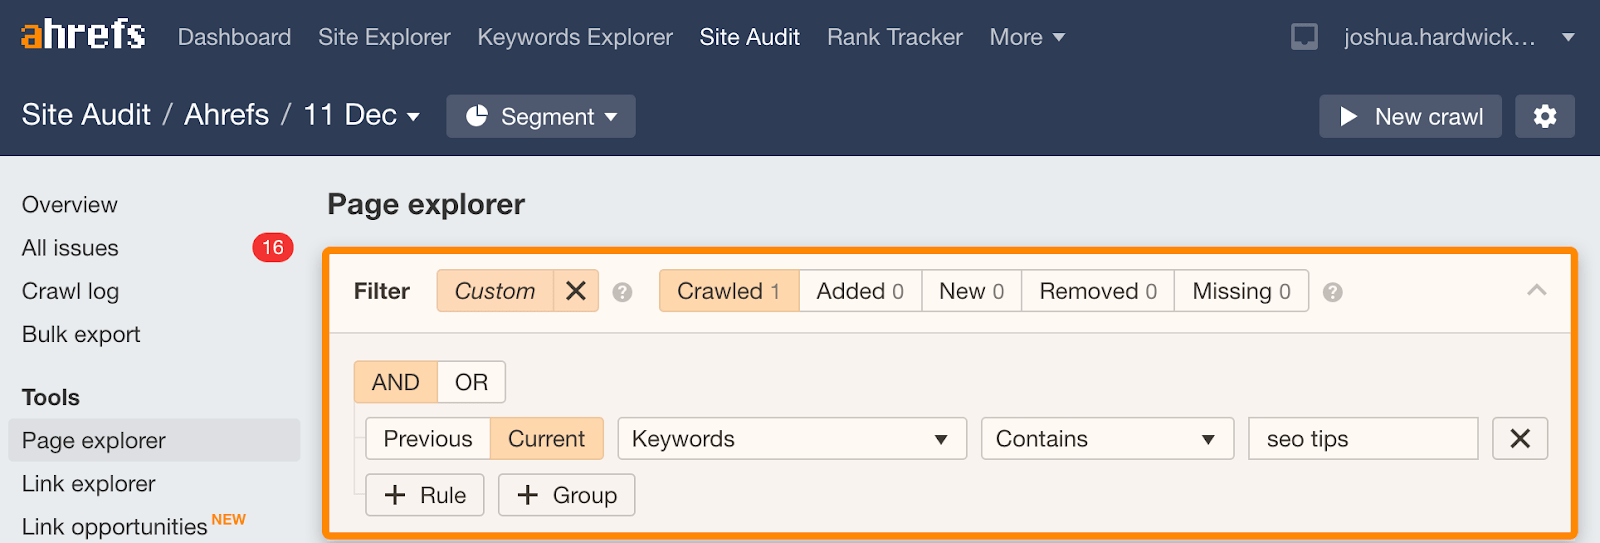 1 page explorer keywords